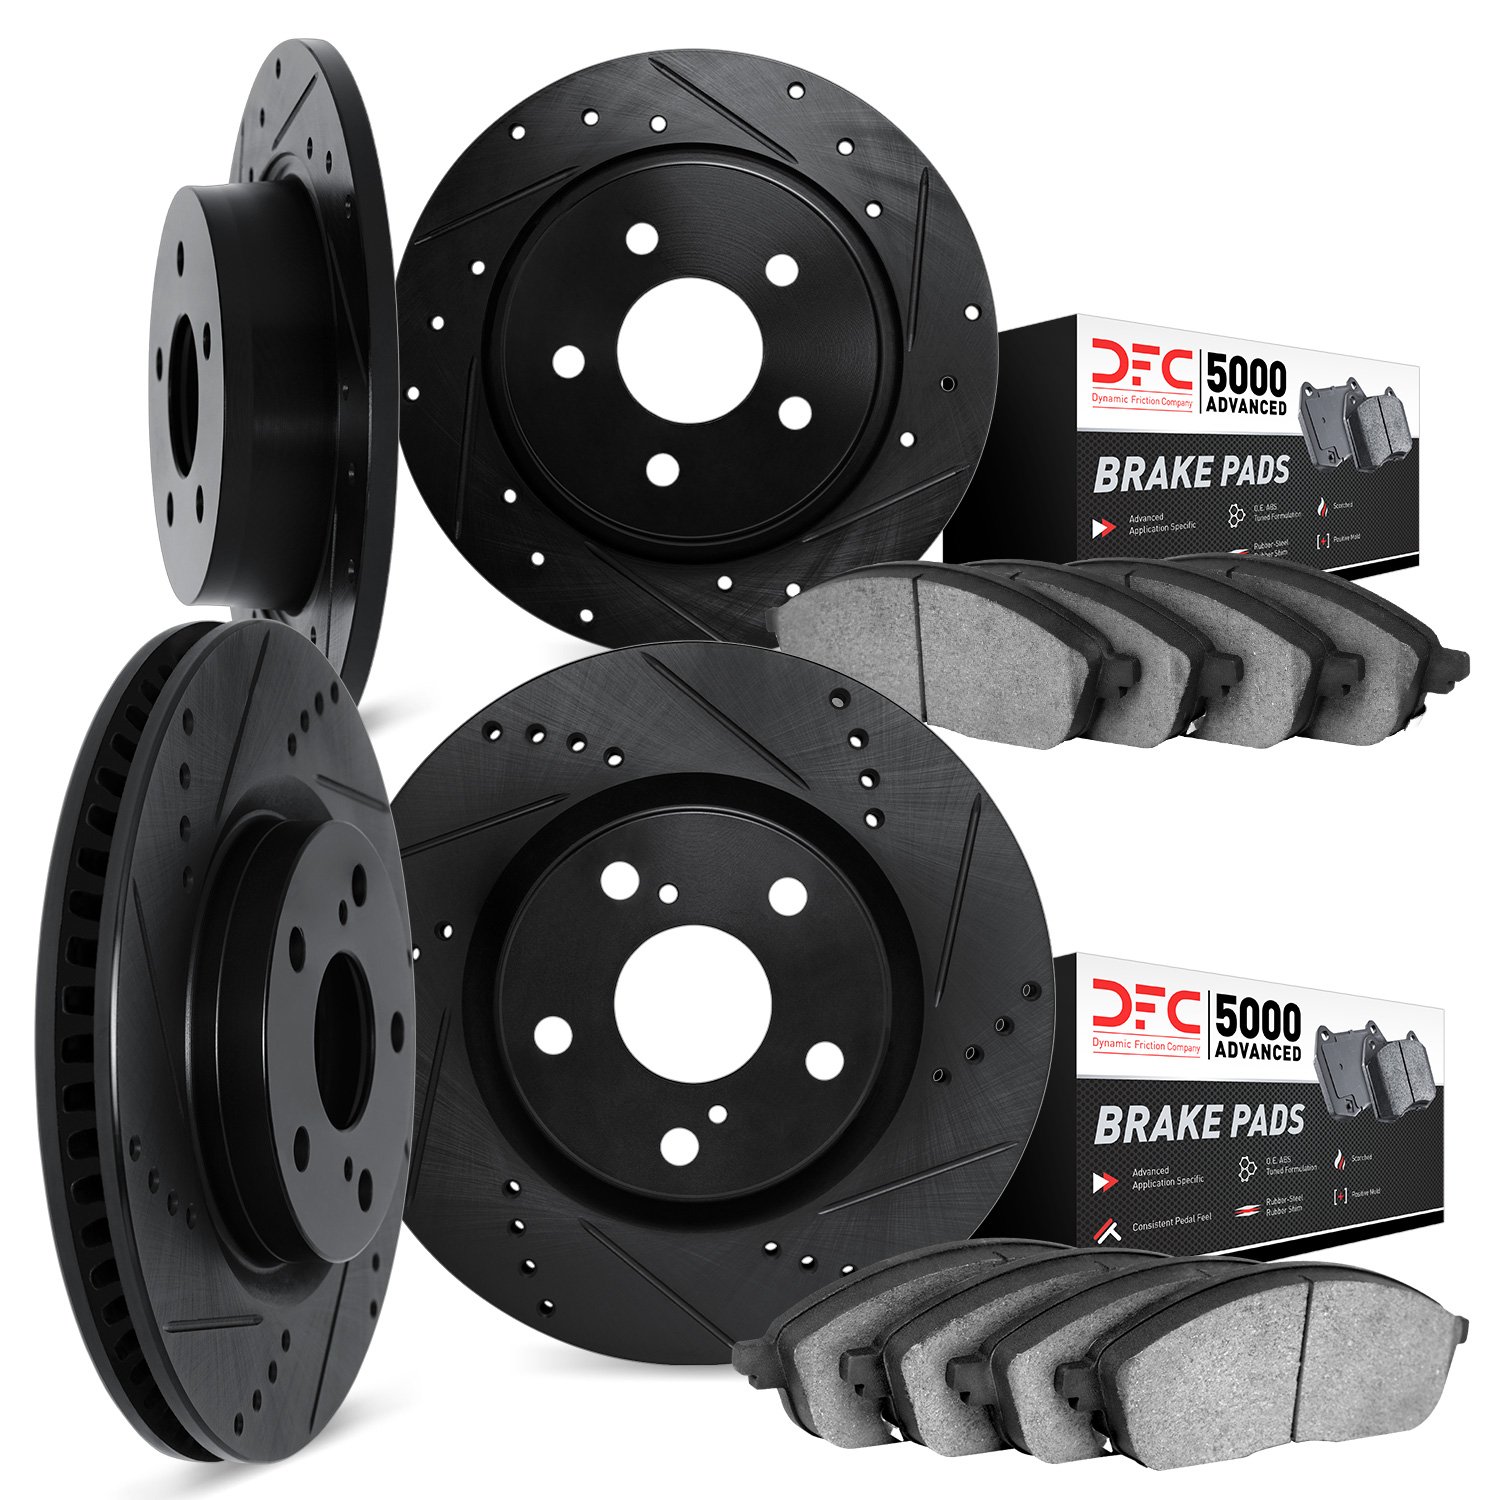 8504-42057 Drilled/Slotted Brake Rotors w/5000 Advanced Brake Pads Kit [Black], 2015-2015 Mopar, Position: Front and Rear